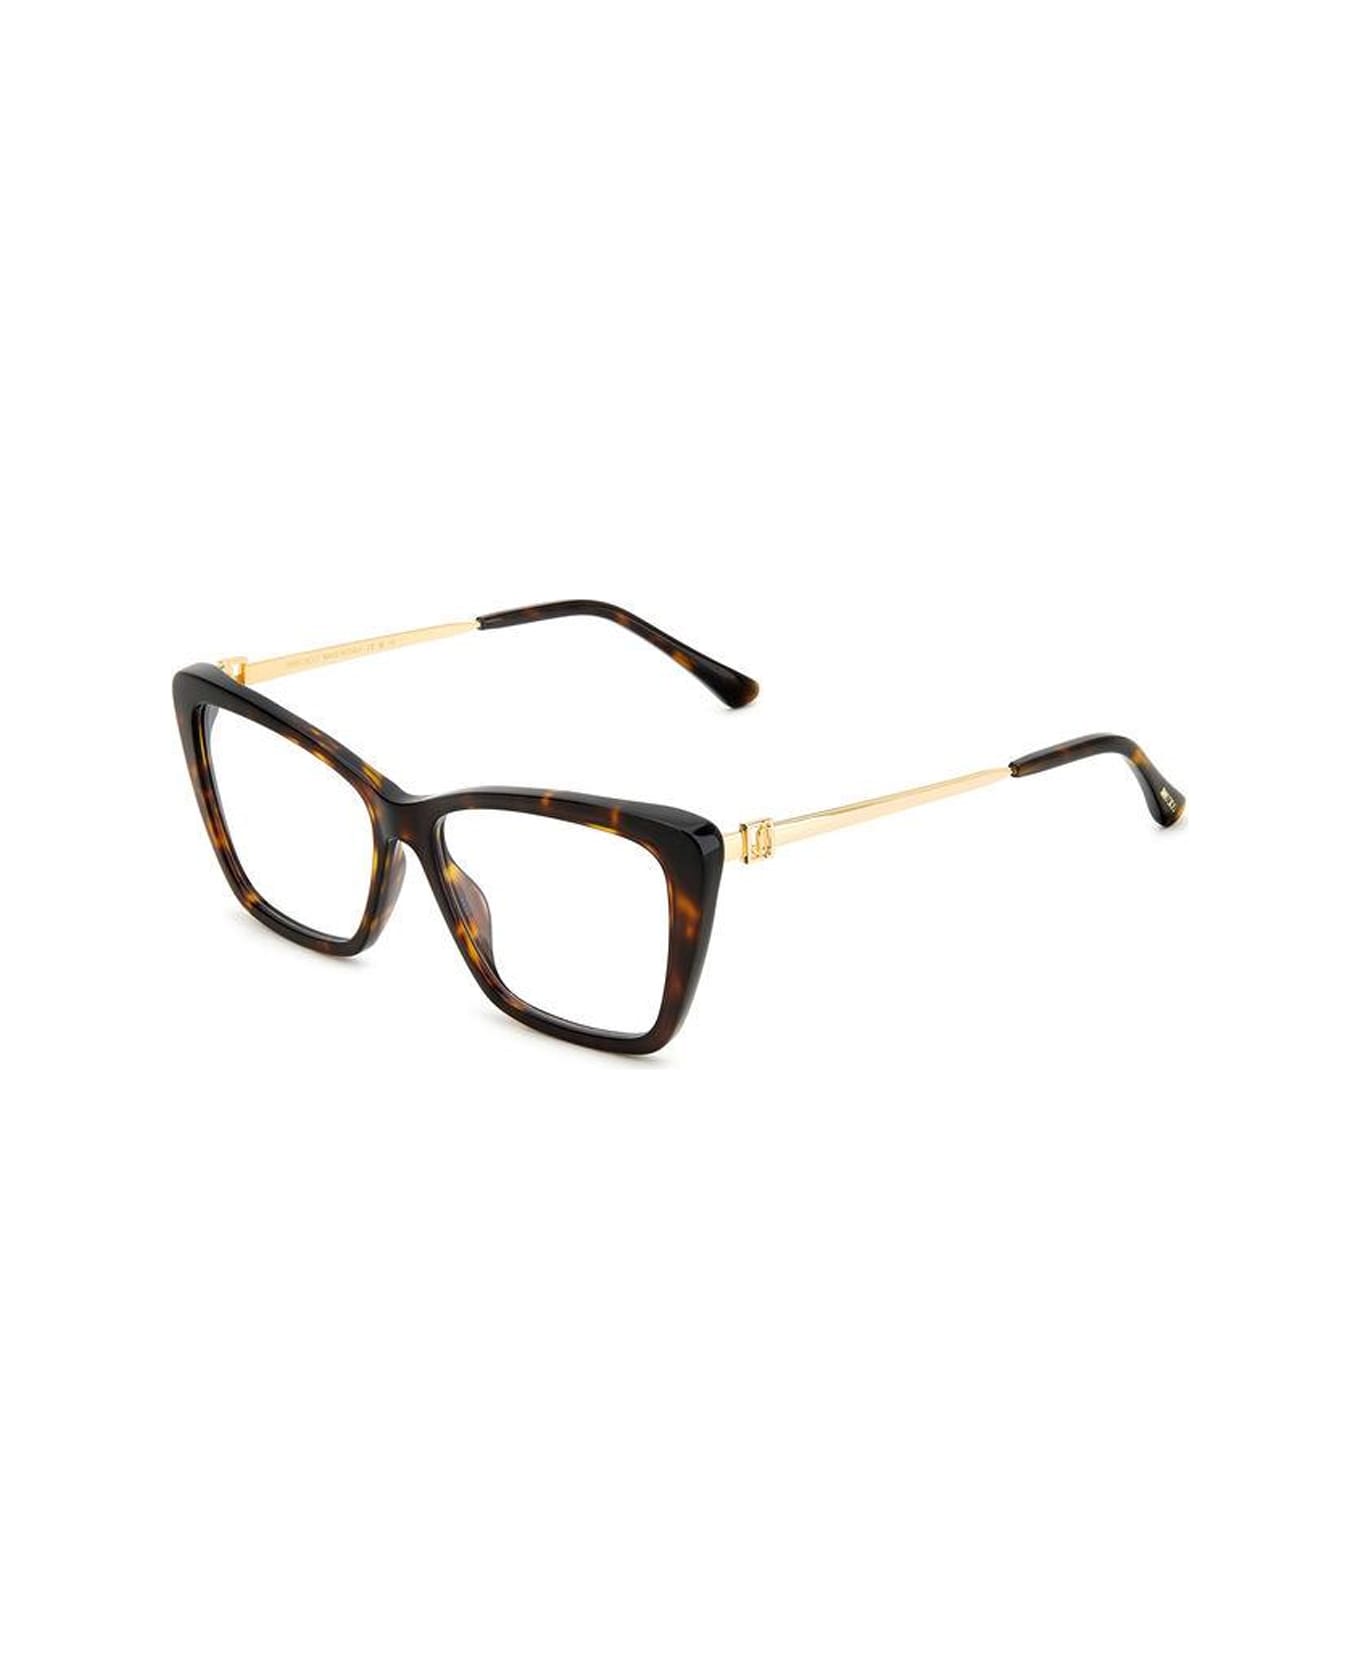 Jimmy Choo Eyewear Jc375 086/15 Glasses - Marrone アイウェア